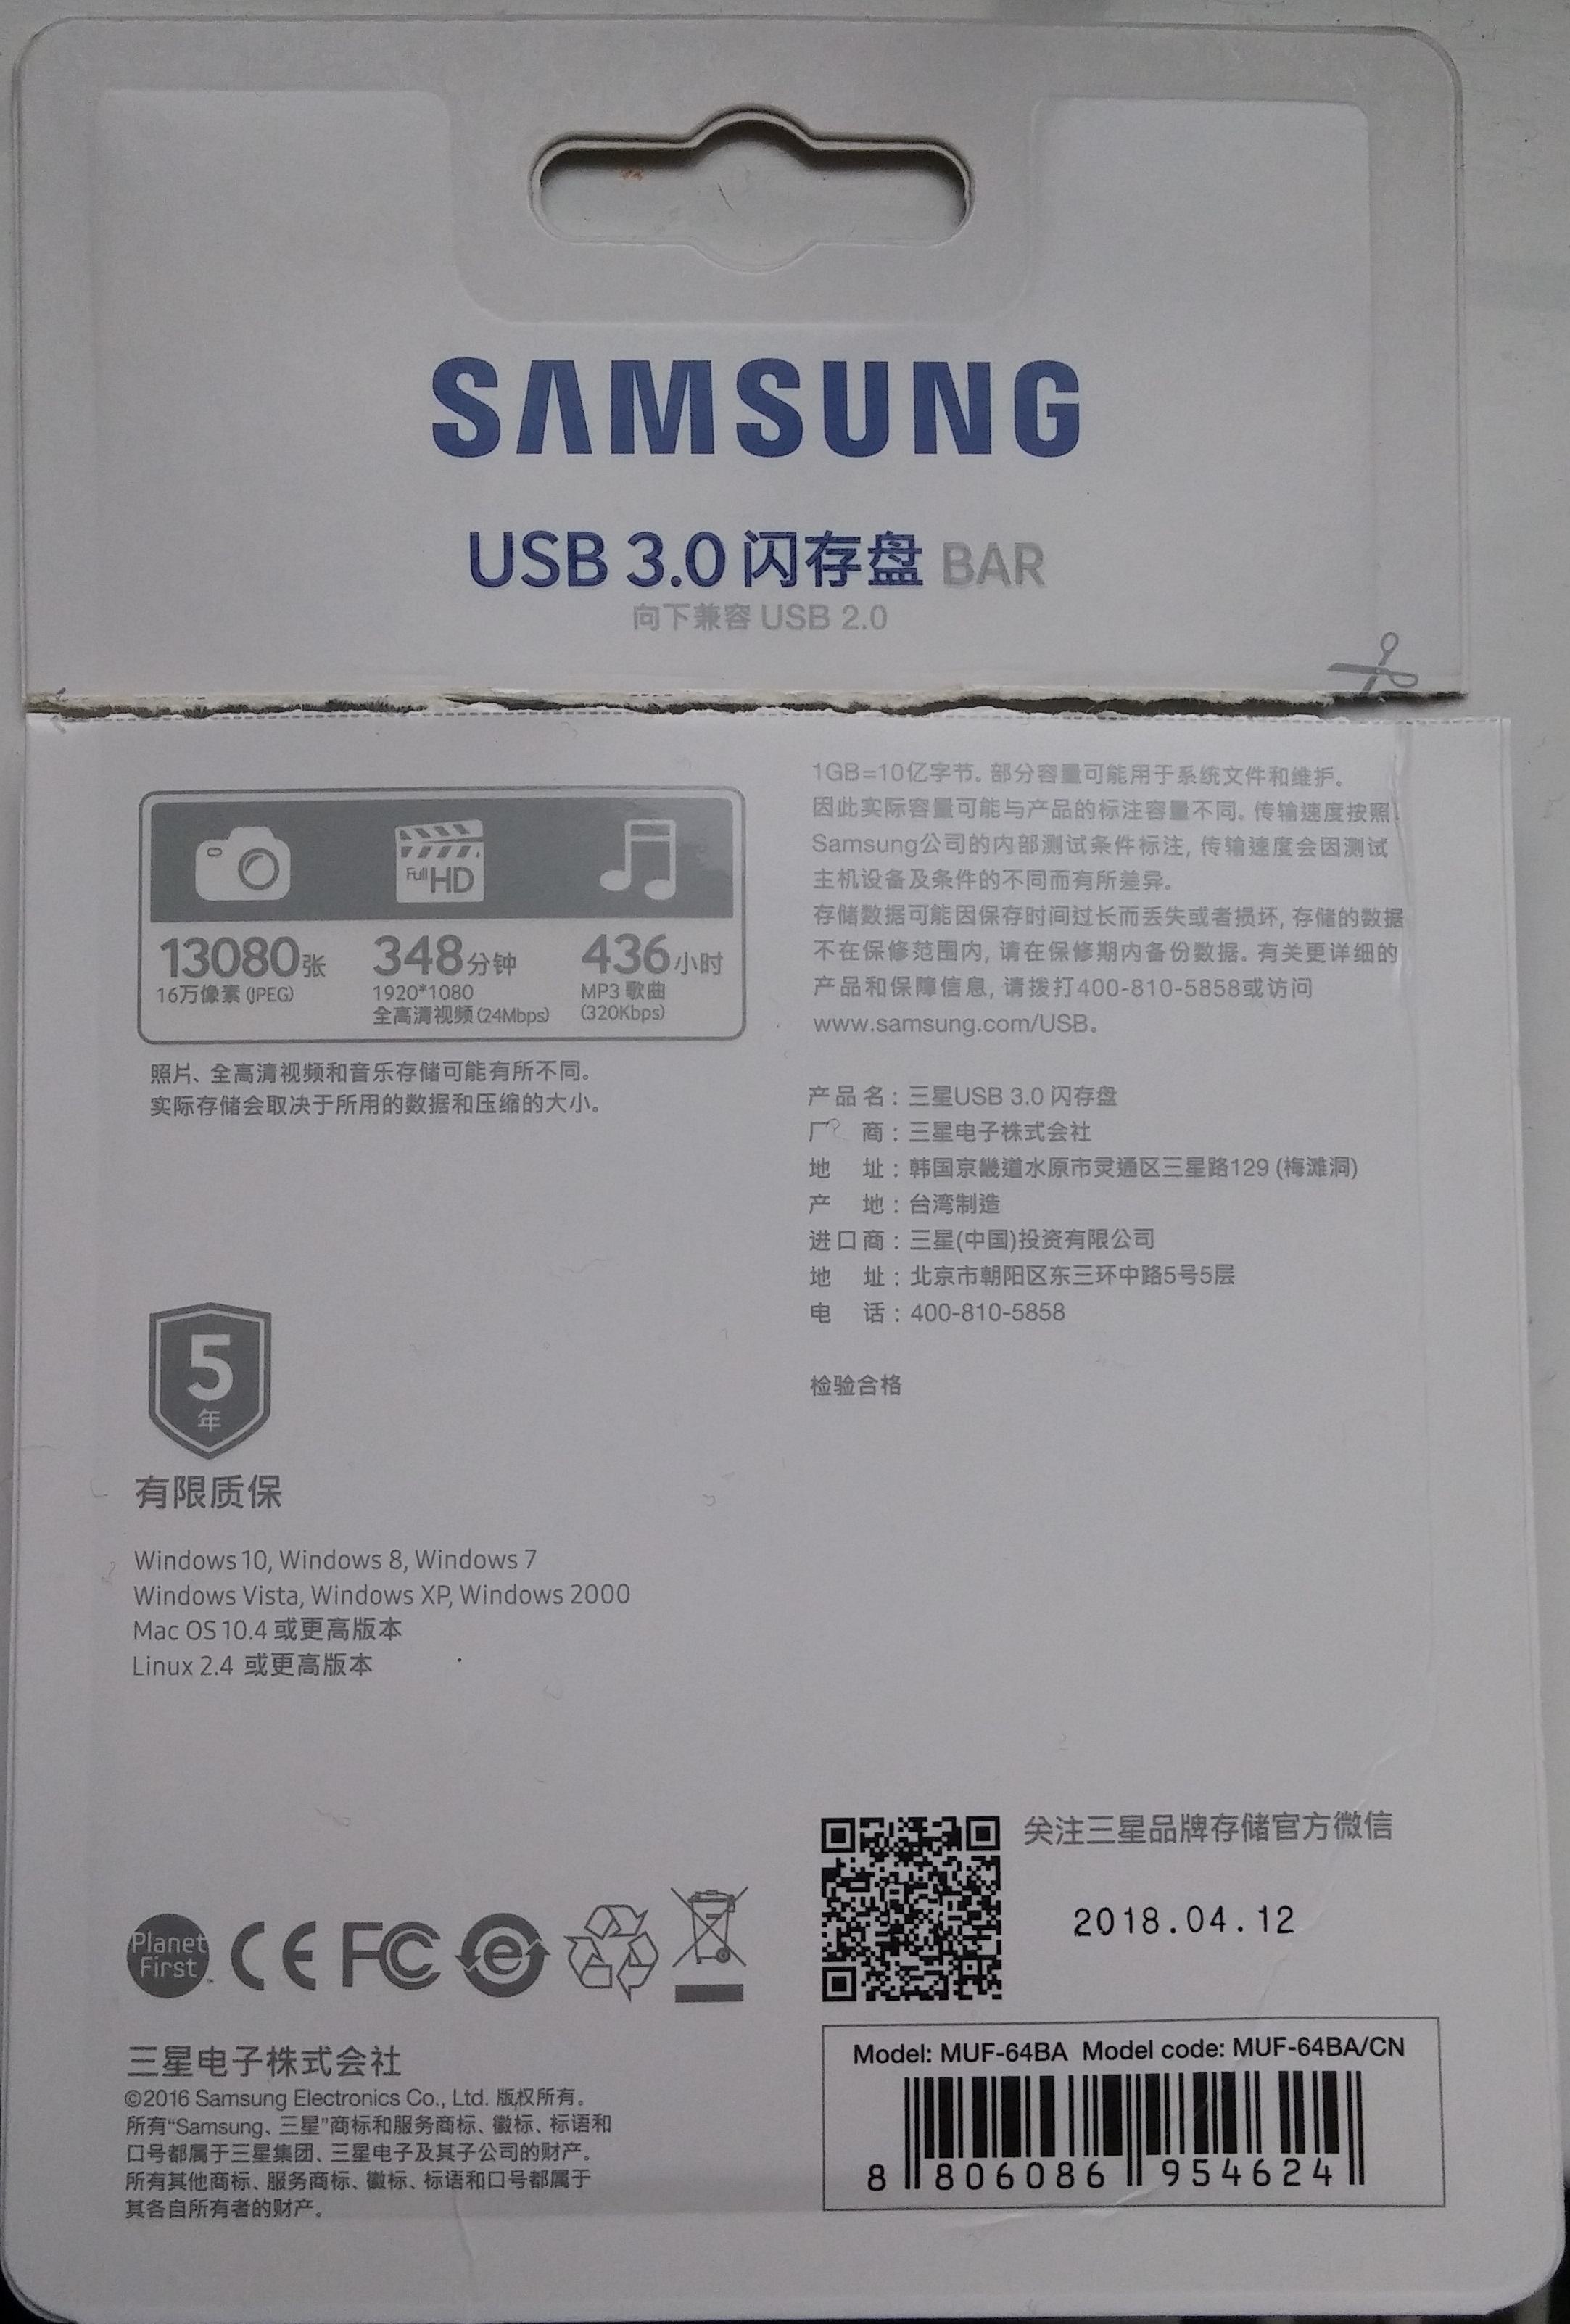 Is this a Fake USB memory Bar? - Samsung Community